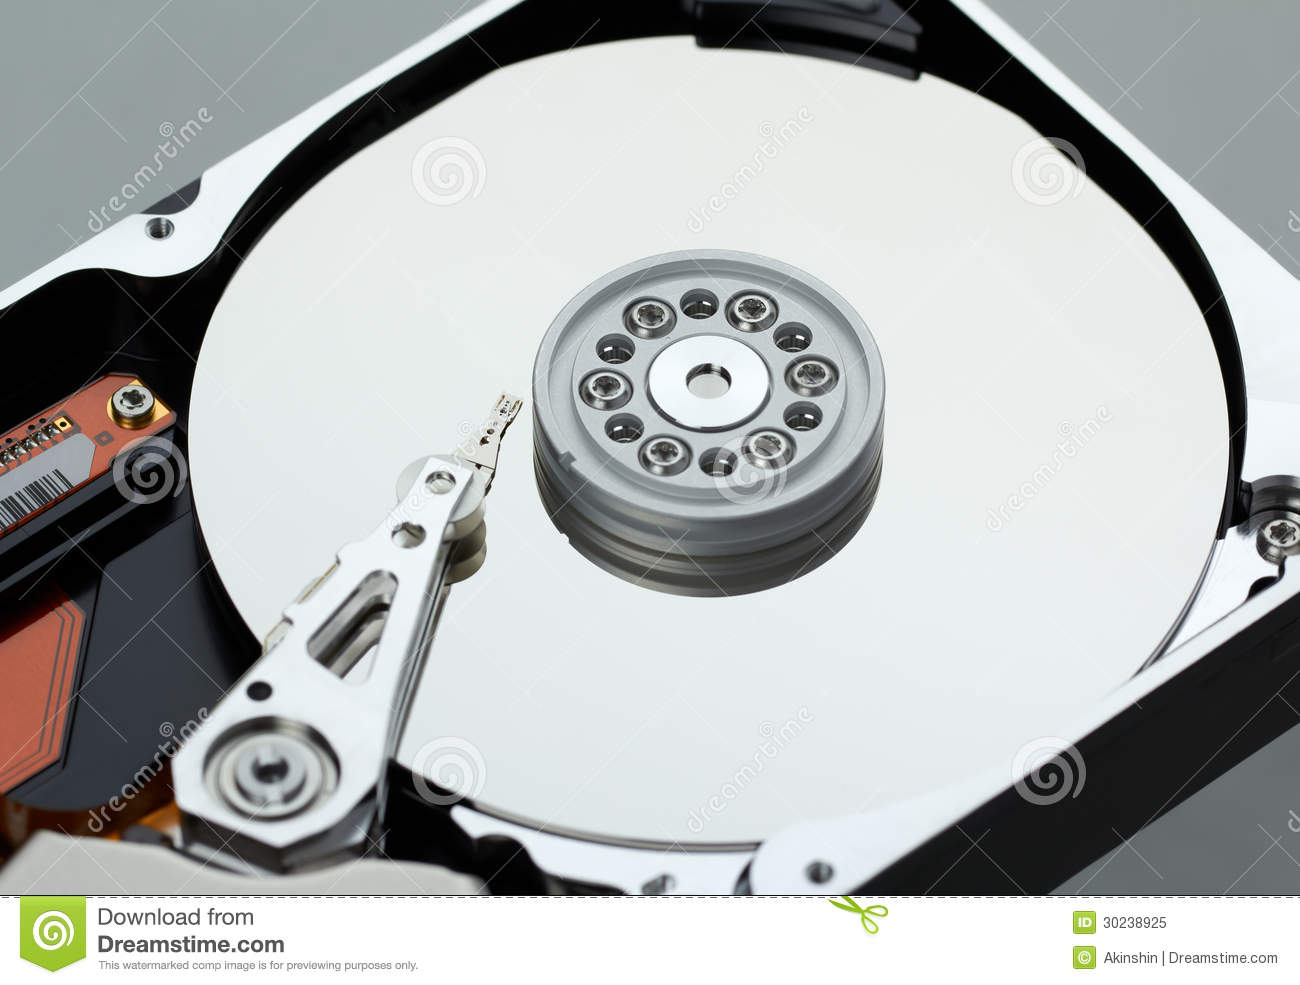 Hard Disk Drive Royalty Free Stock Photo   Image  30238925